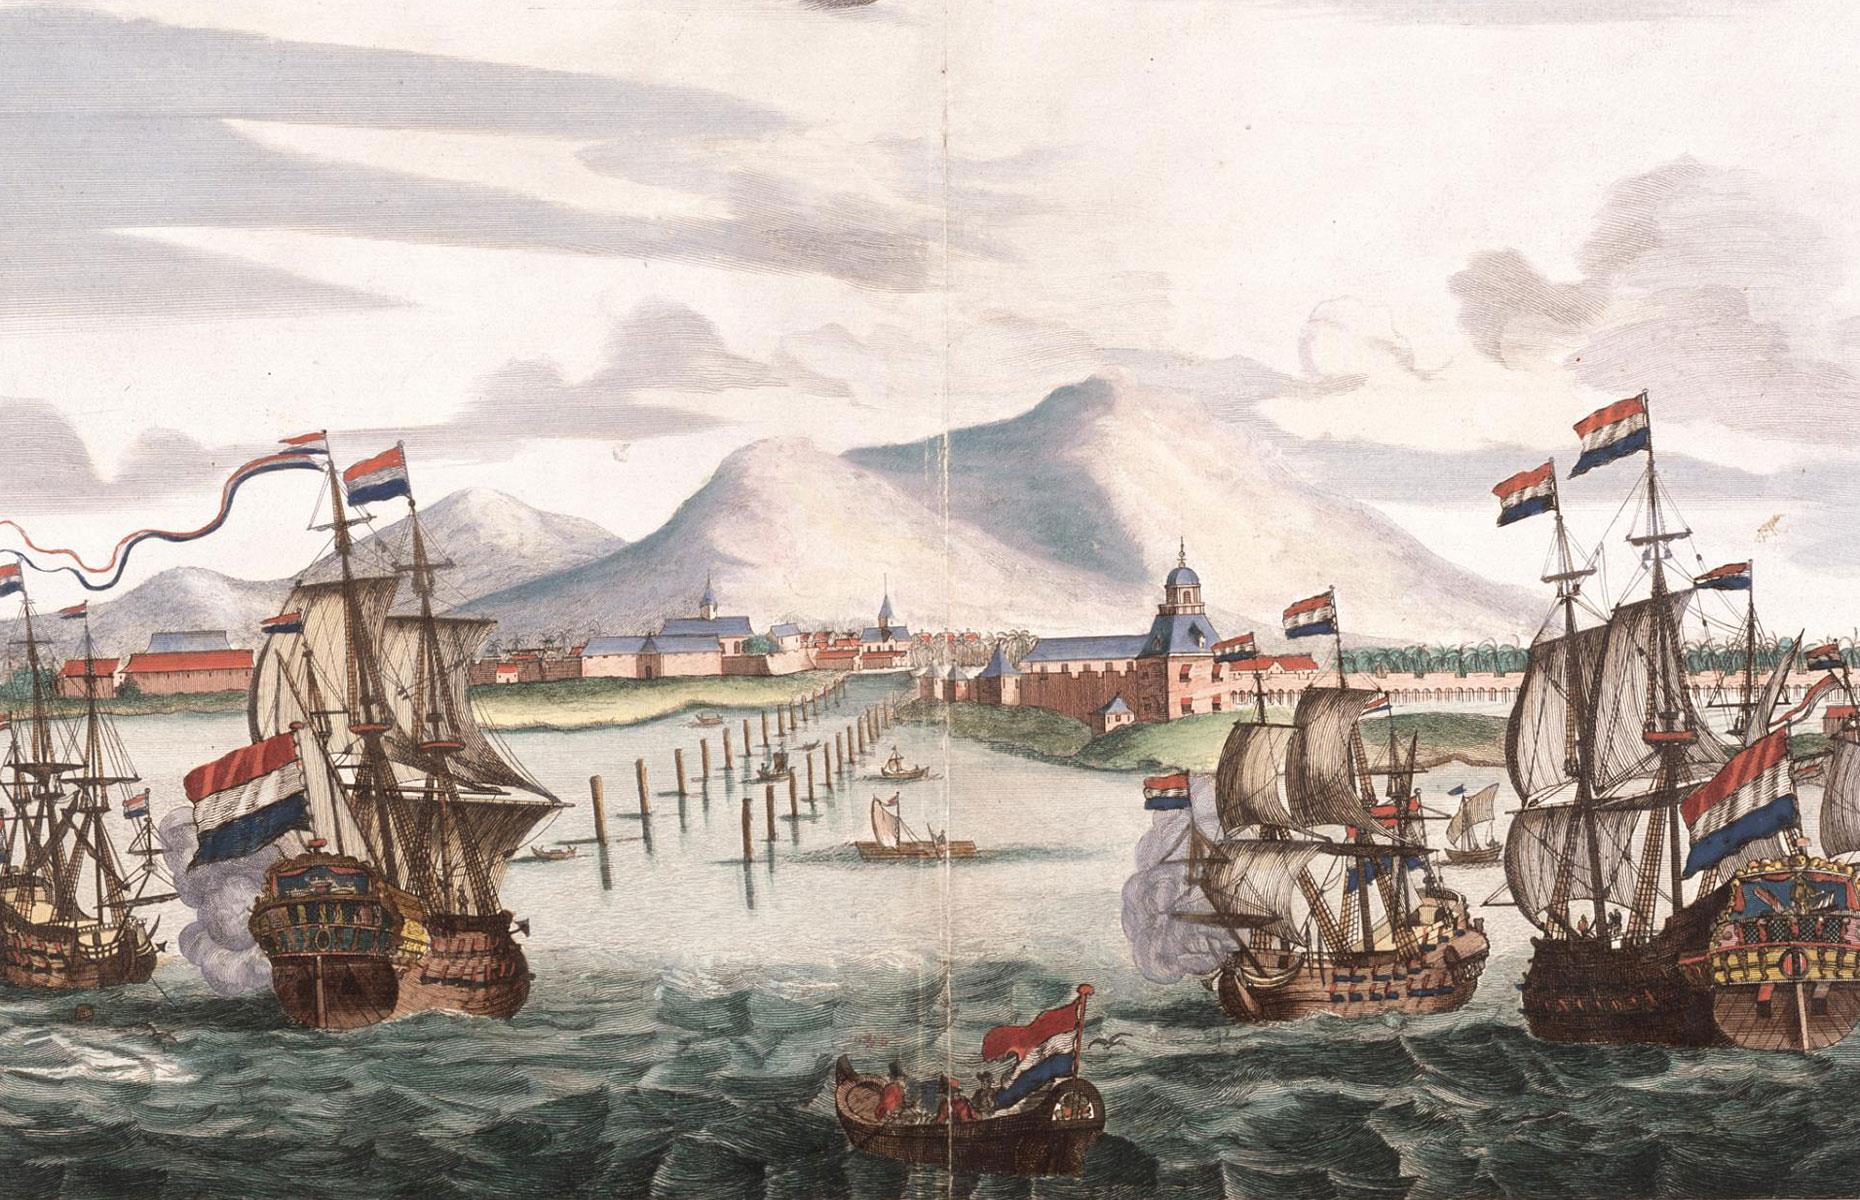 Dutch East India Company: $9.1 trillion (£6.9tn)